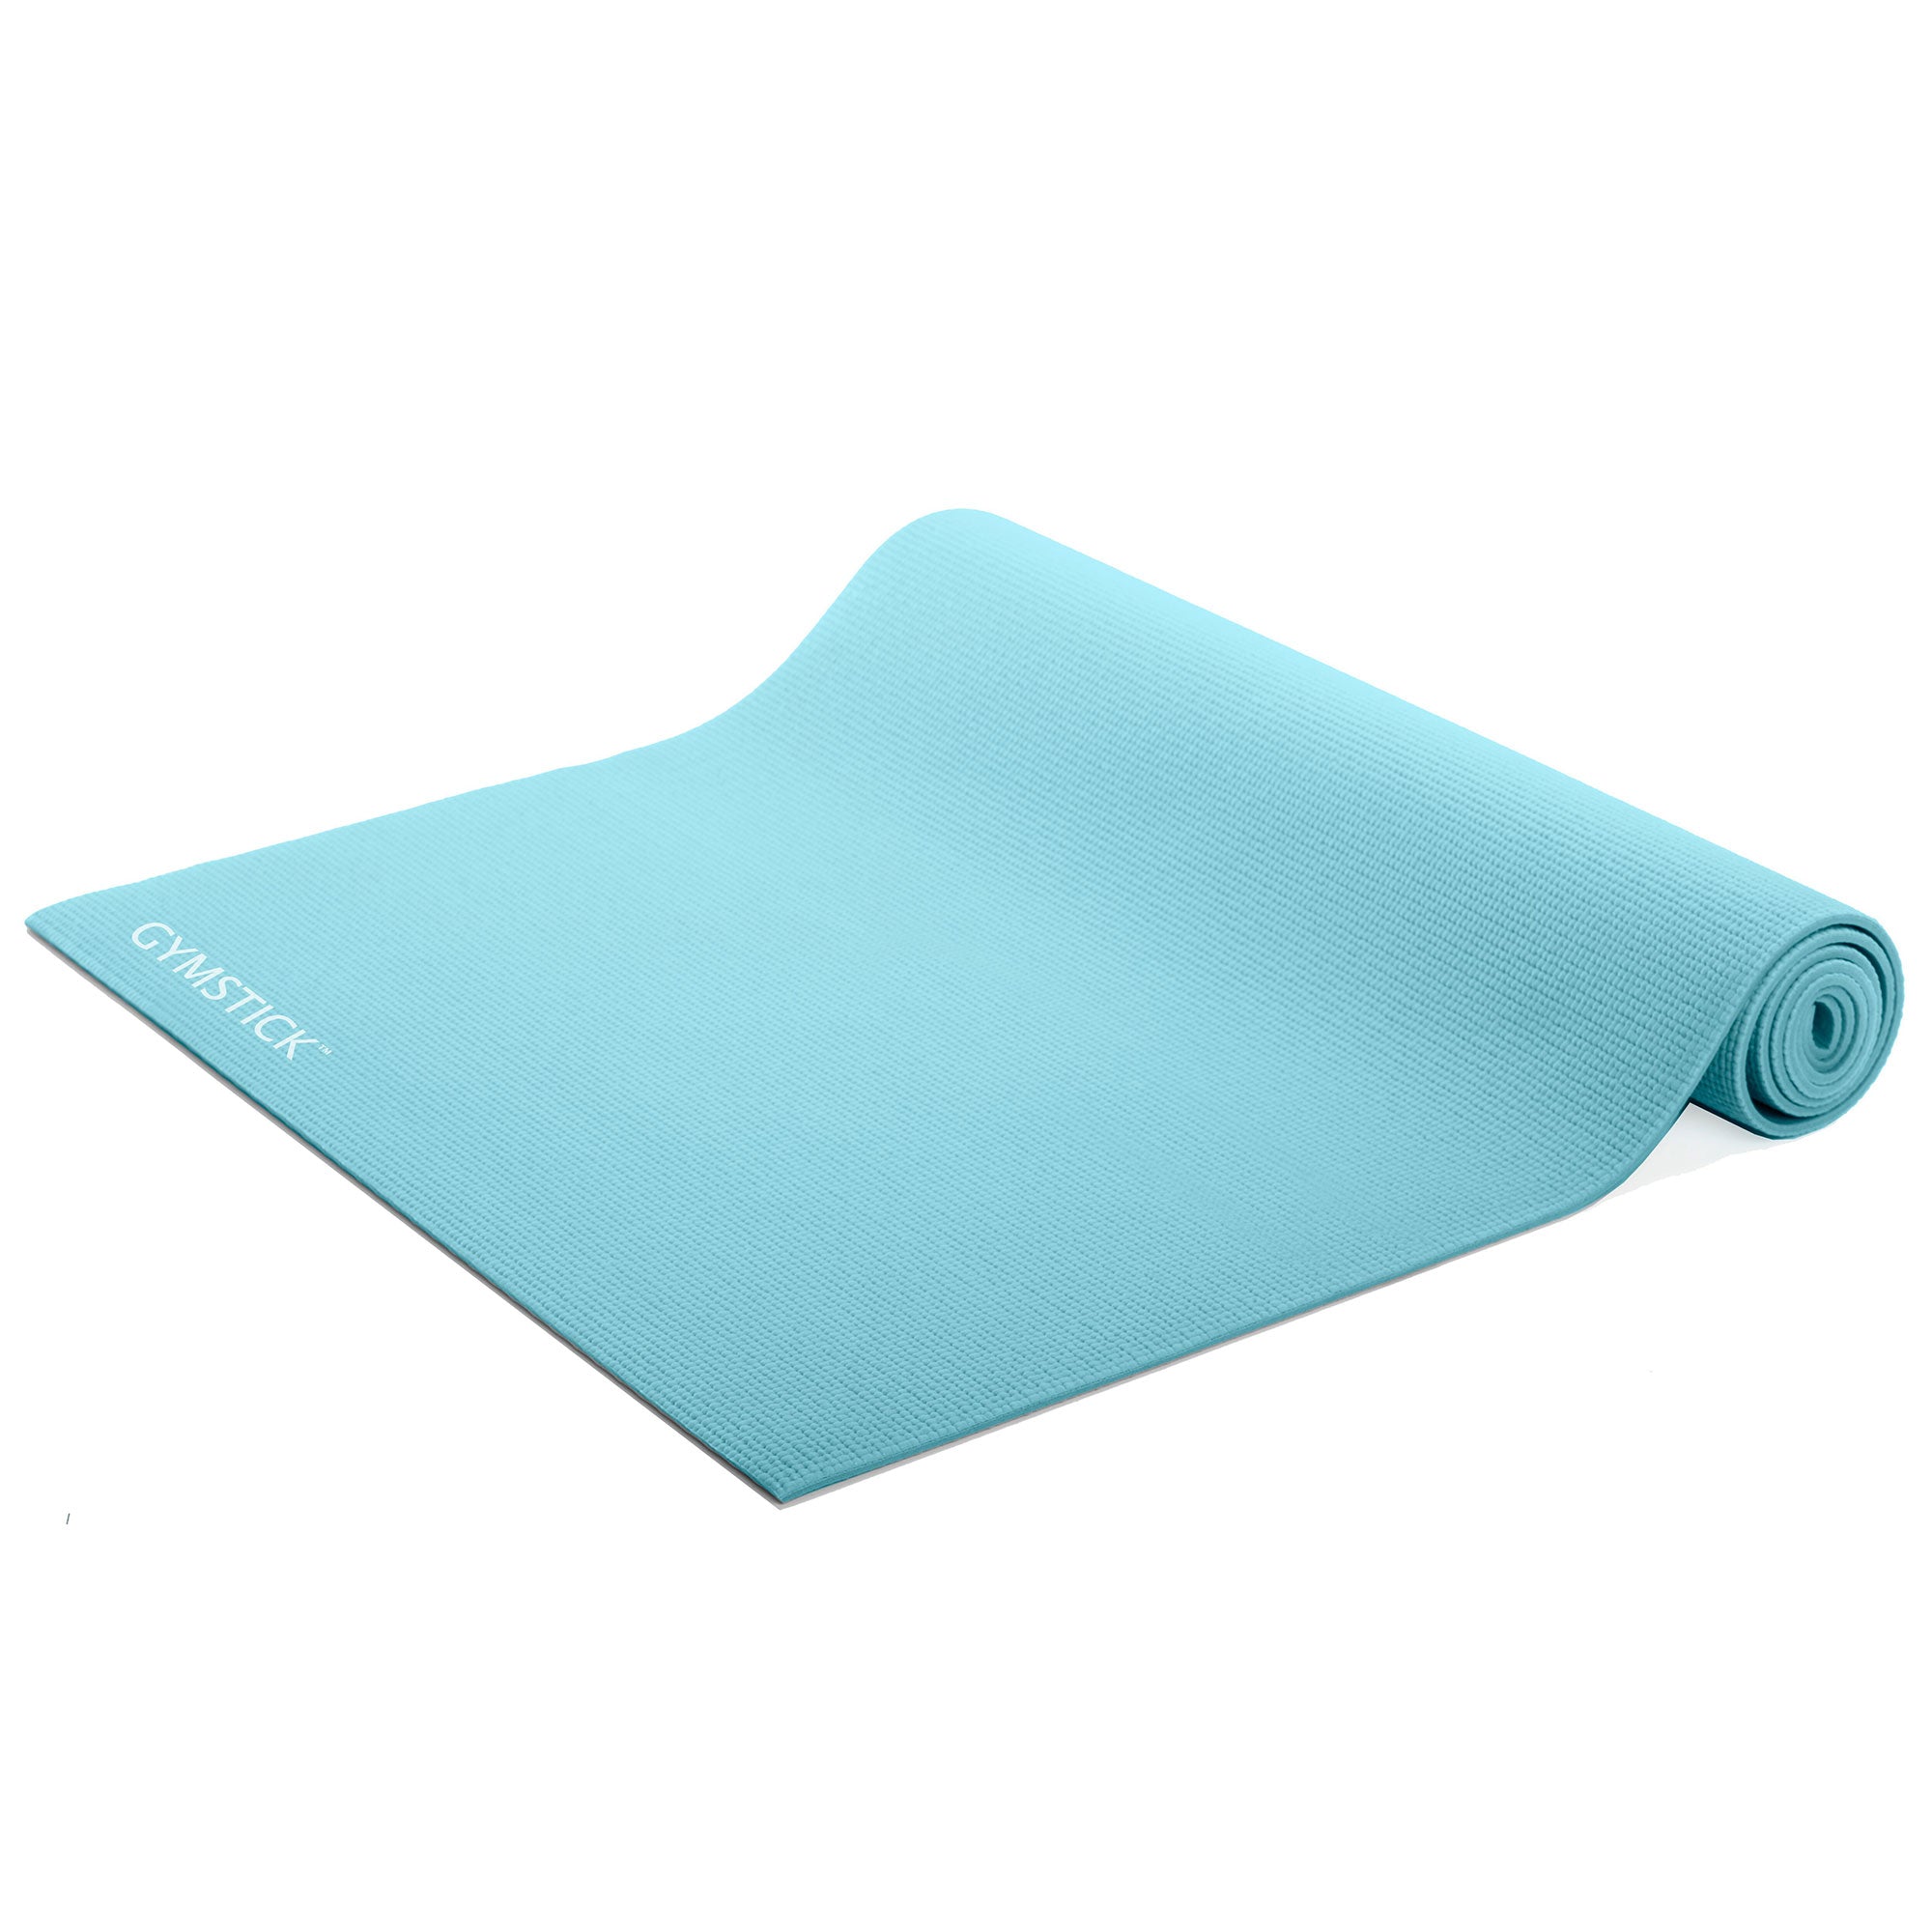 Gymstick yoga base, black/blue/pink/grey - Wasup